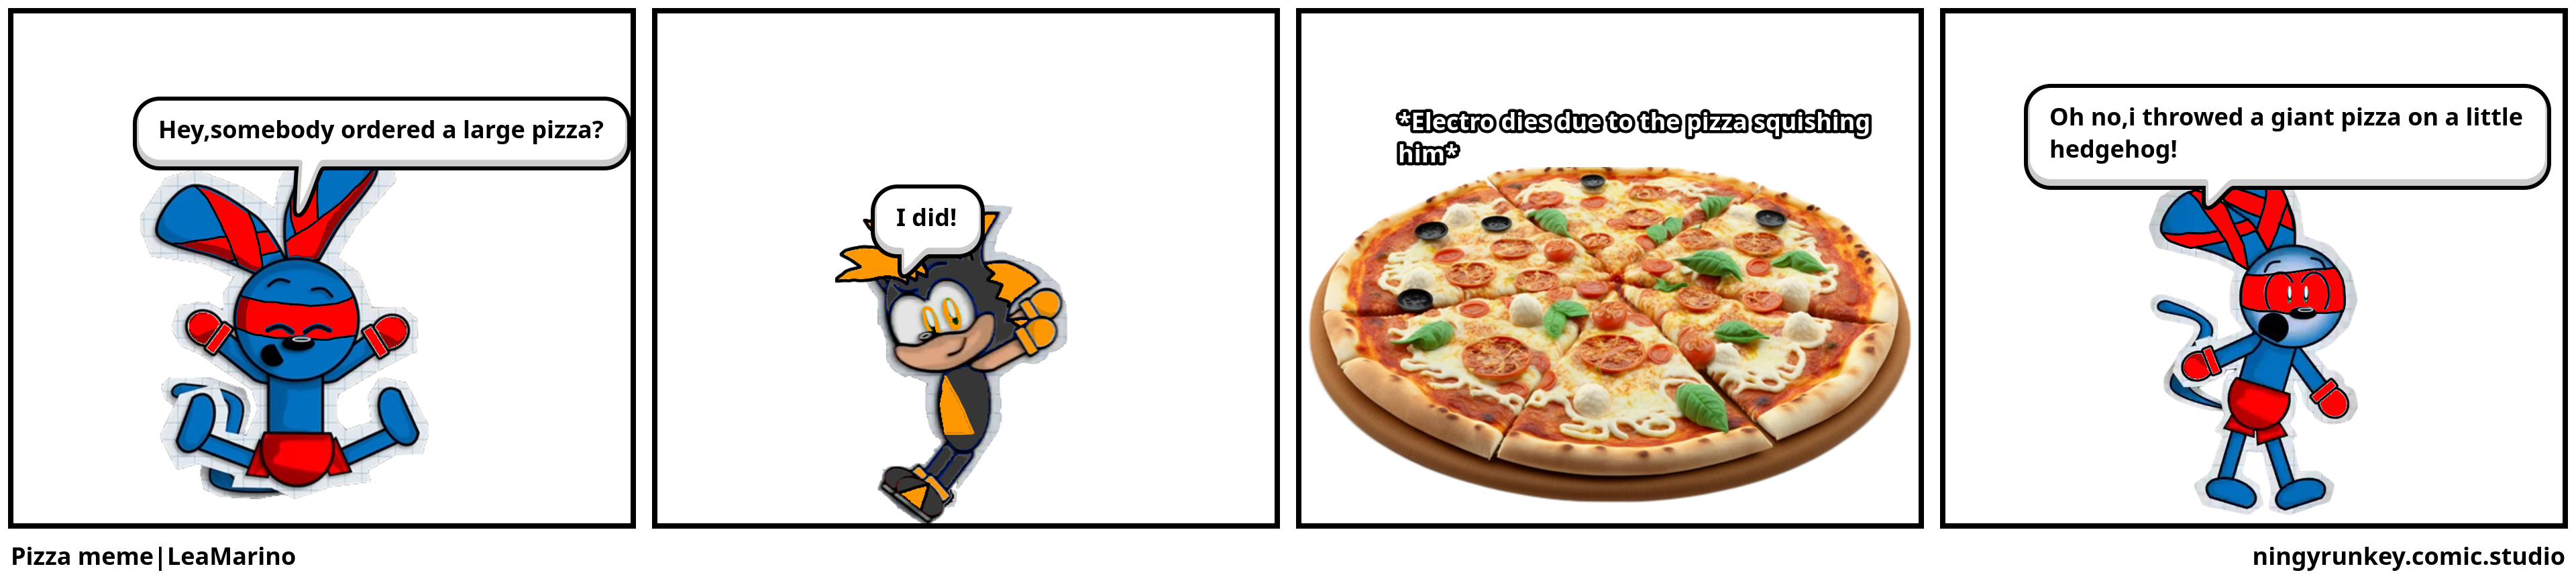 Pizza meme|LeaMarino